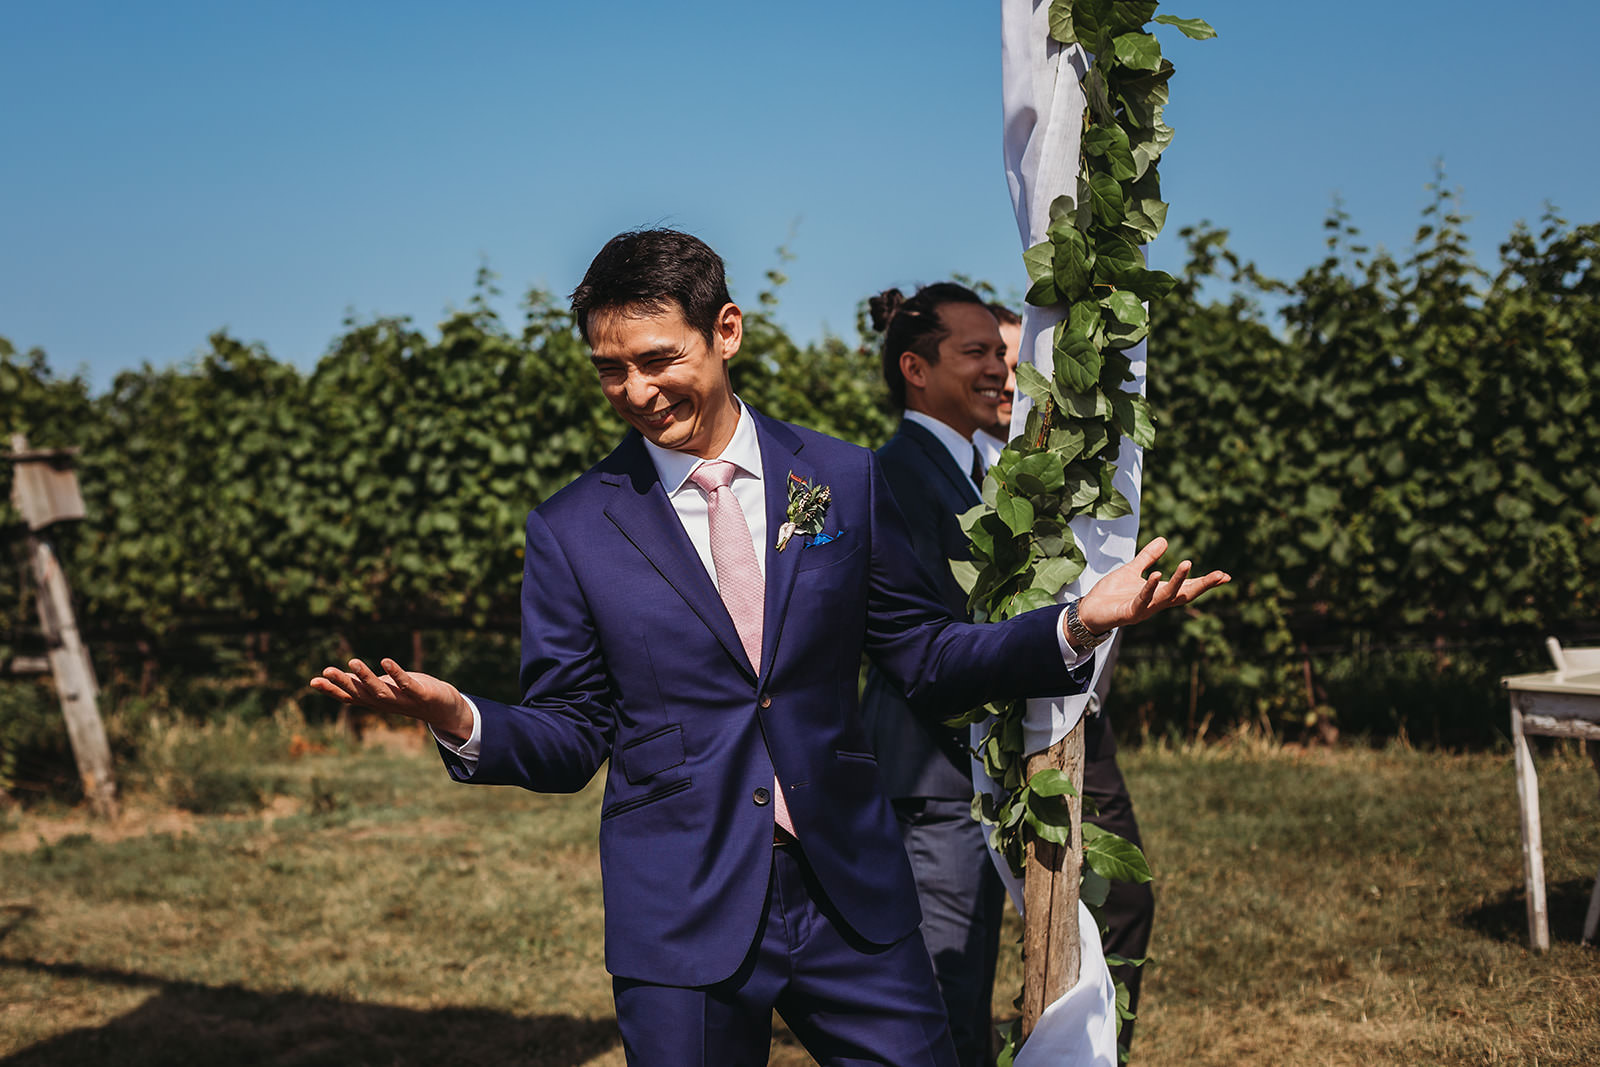 Vineyard Wedding Outdoor Wedding Ceremony